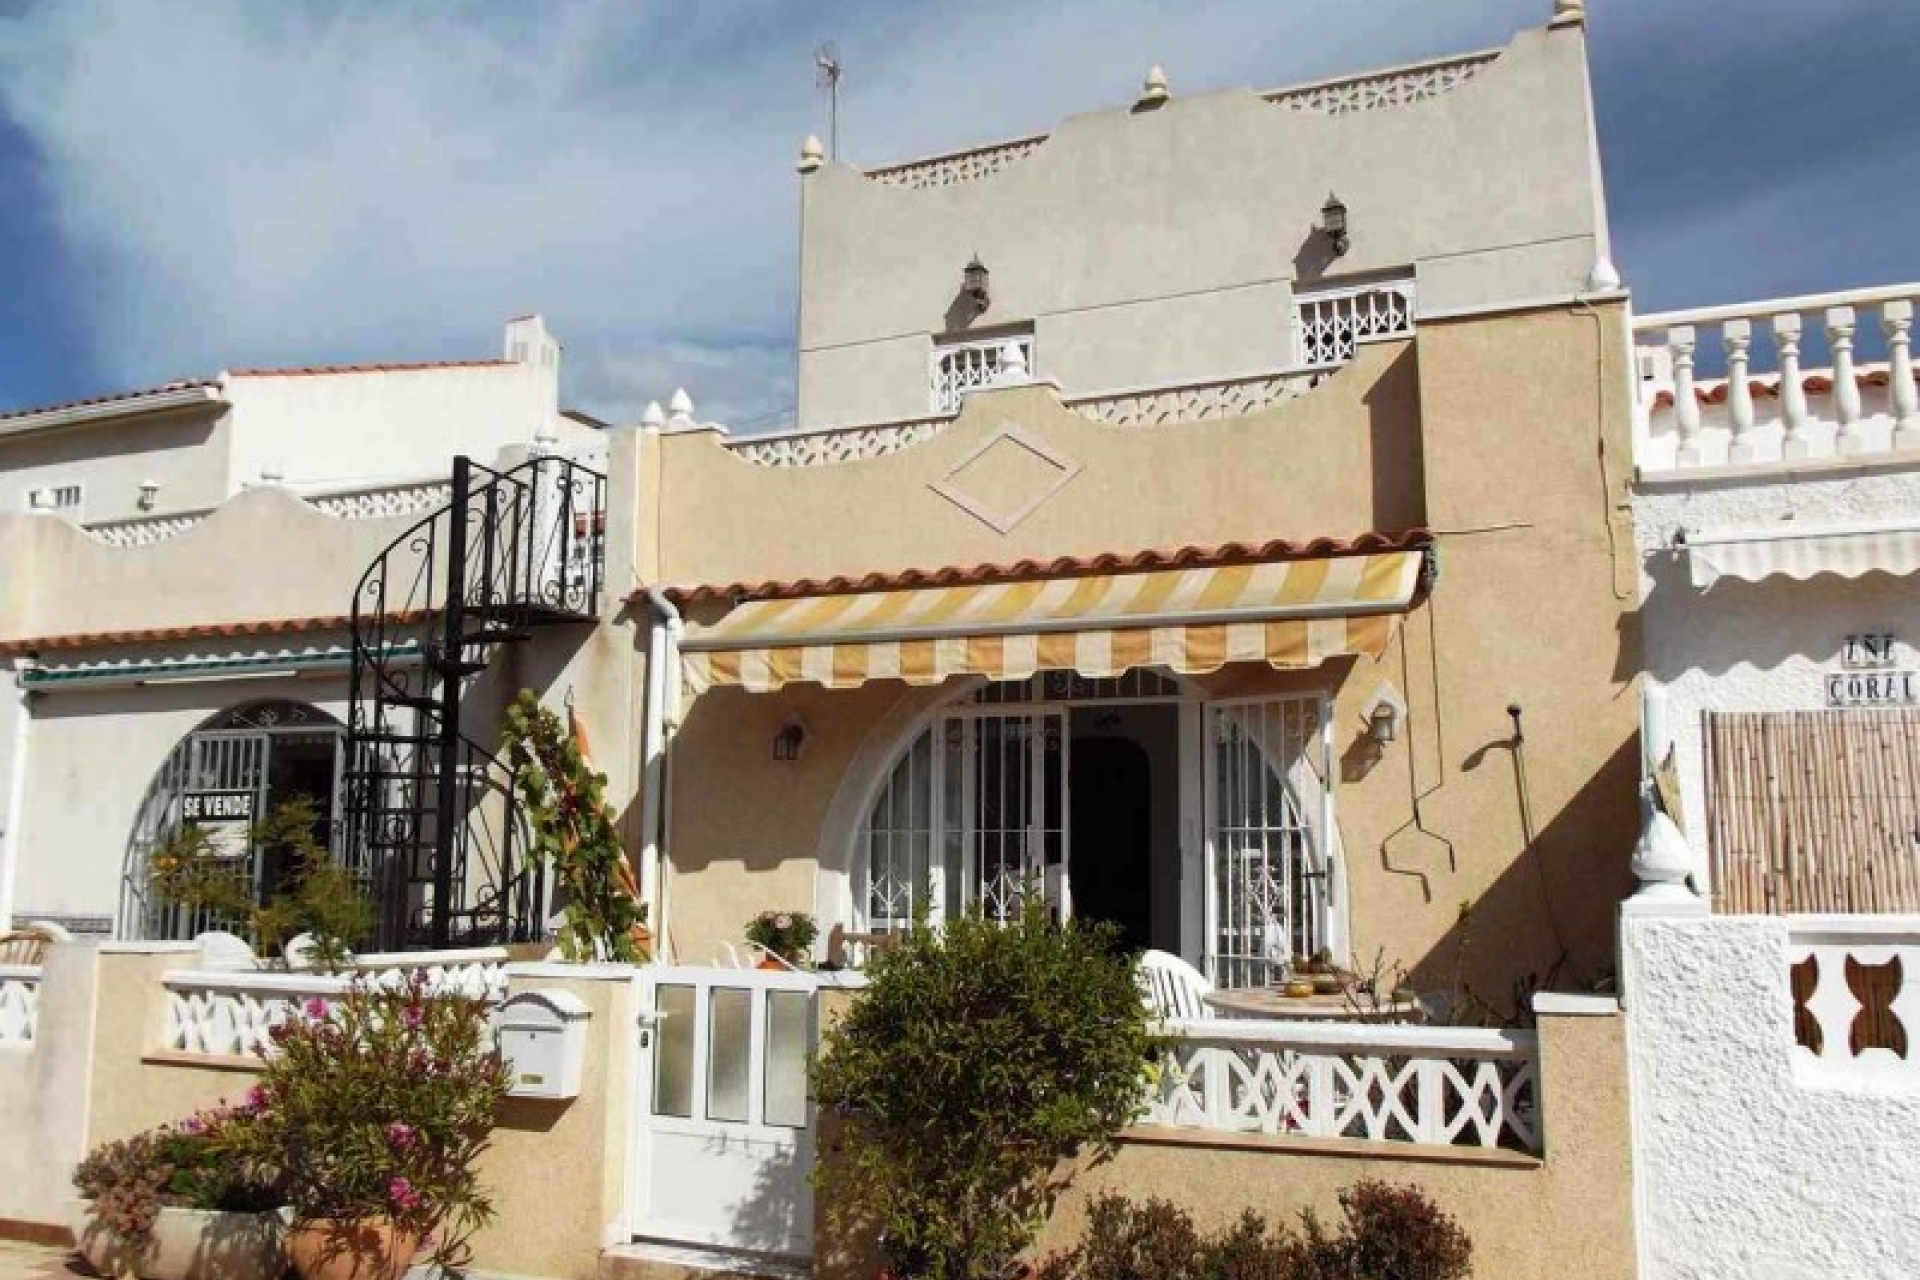 La Siesta cheap bargain property sale Costa Blanca Spain